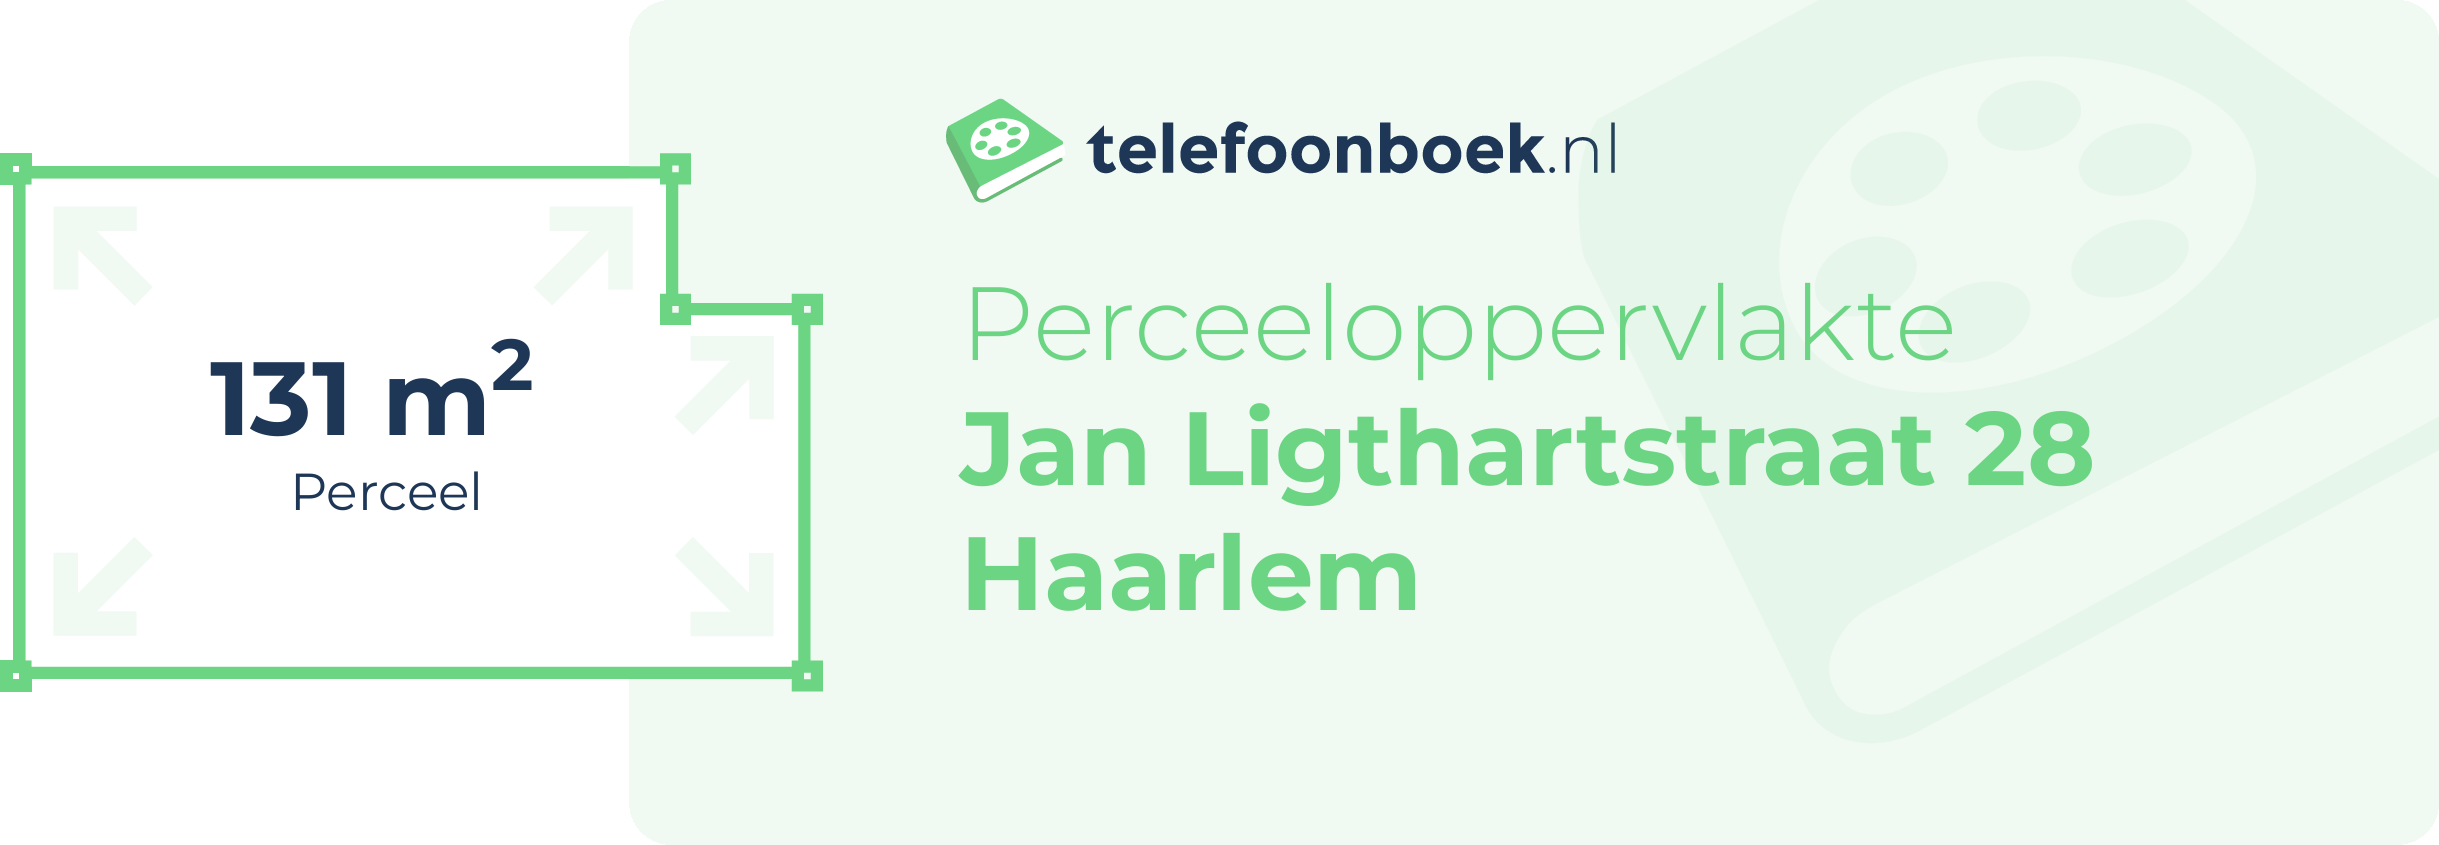 Perceeloppervlakte Jan Ligthartstraat 28 Haarlem